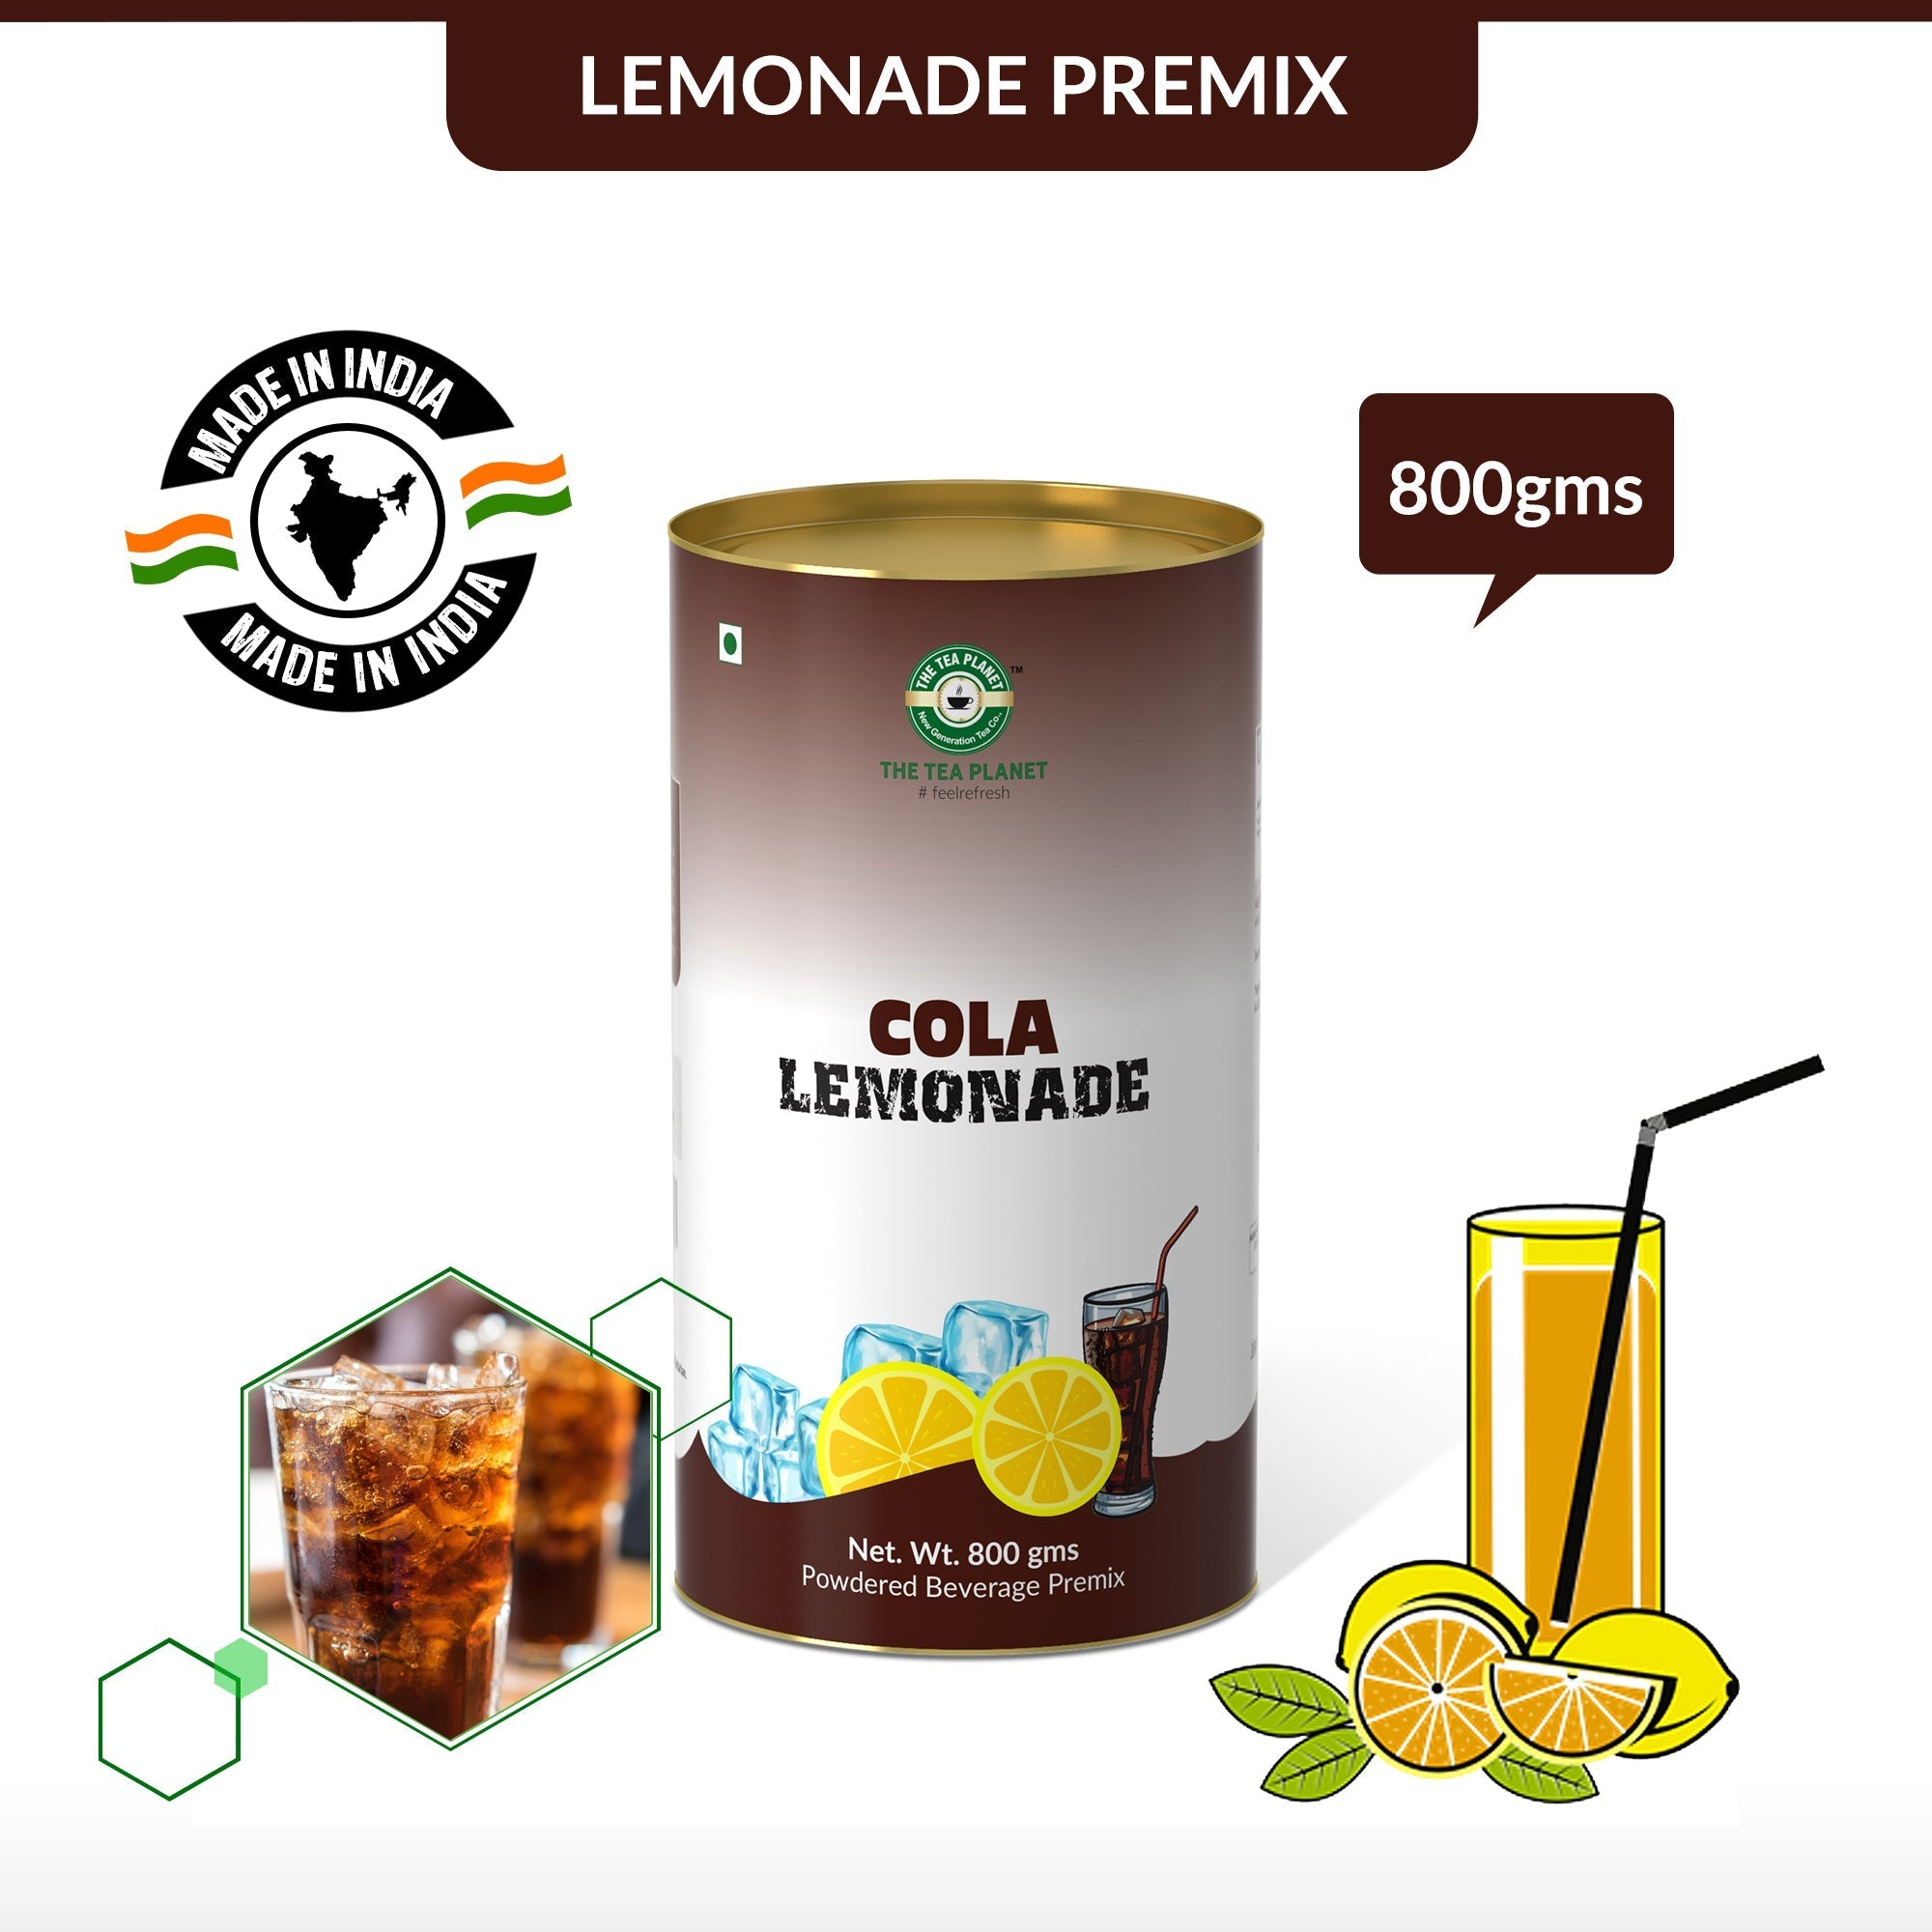 Cola Lemonade Premix - 800 gms